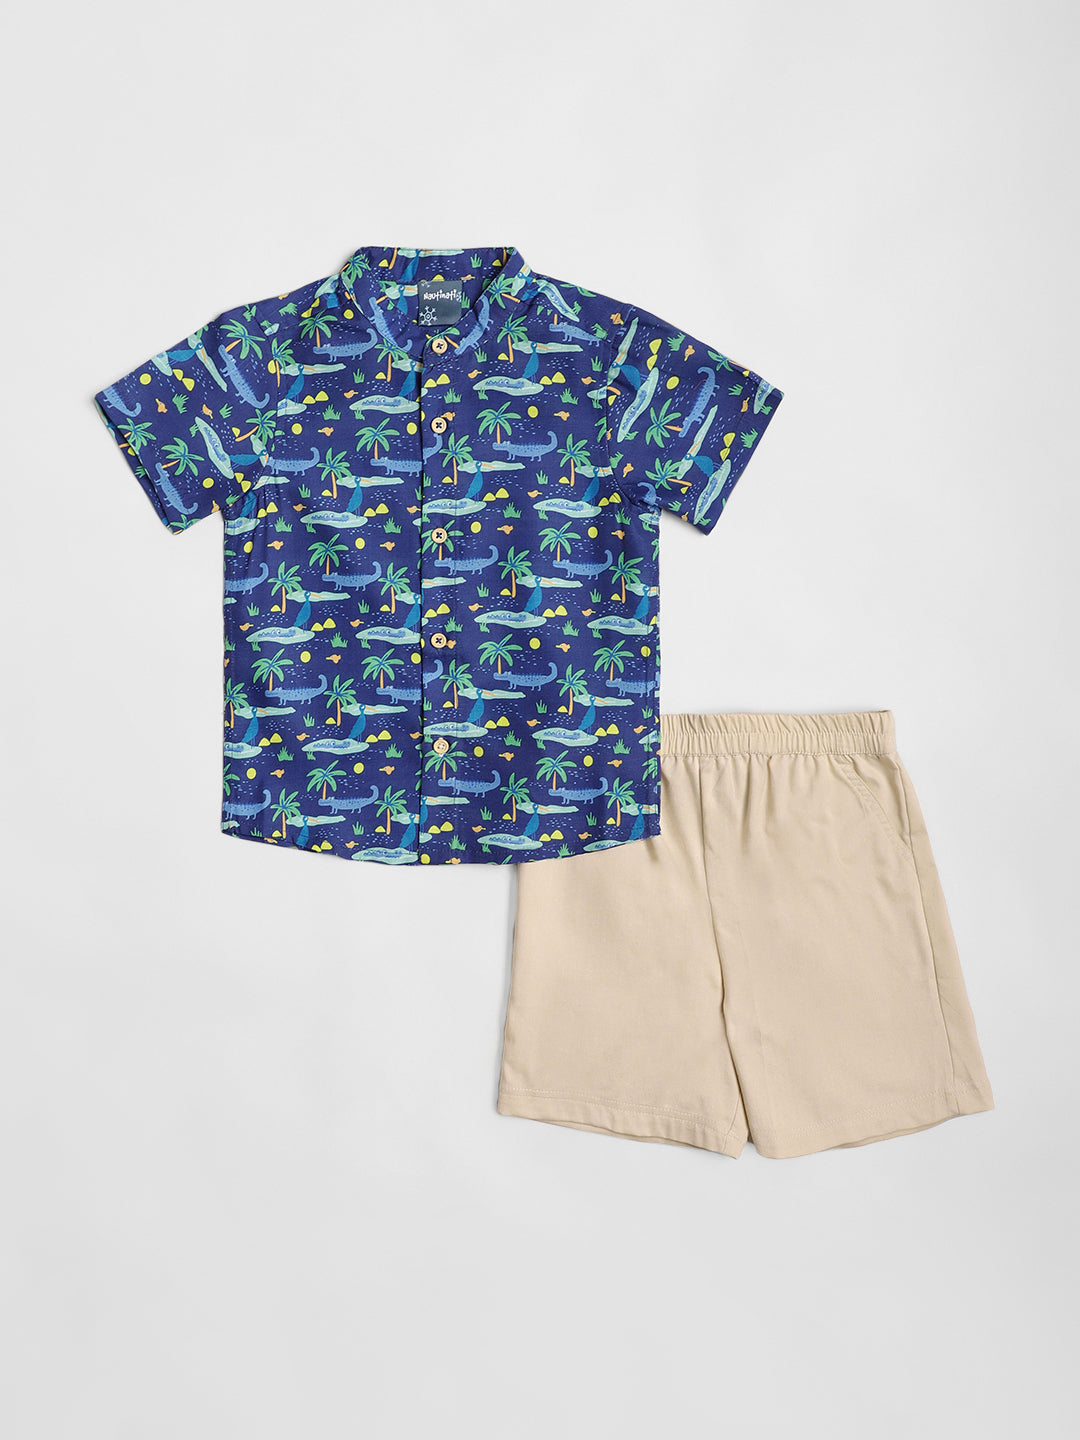 Nauti Nati Boys Blue Printed Shirt with Shorts